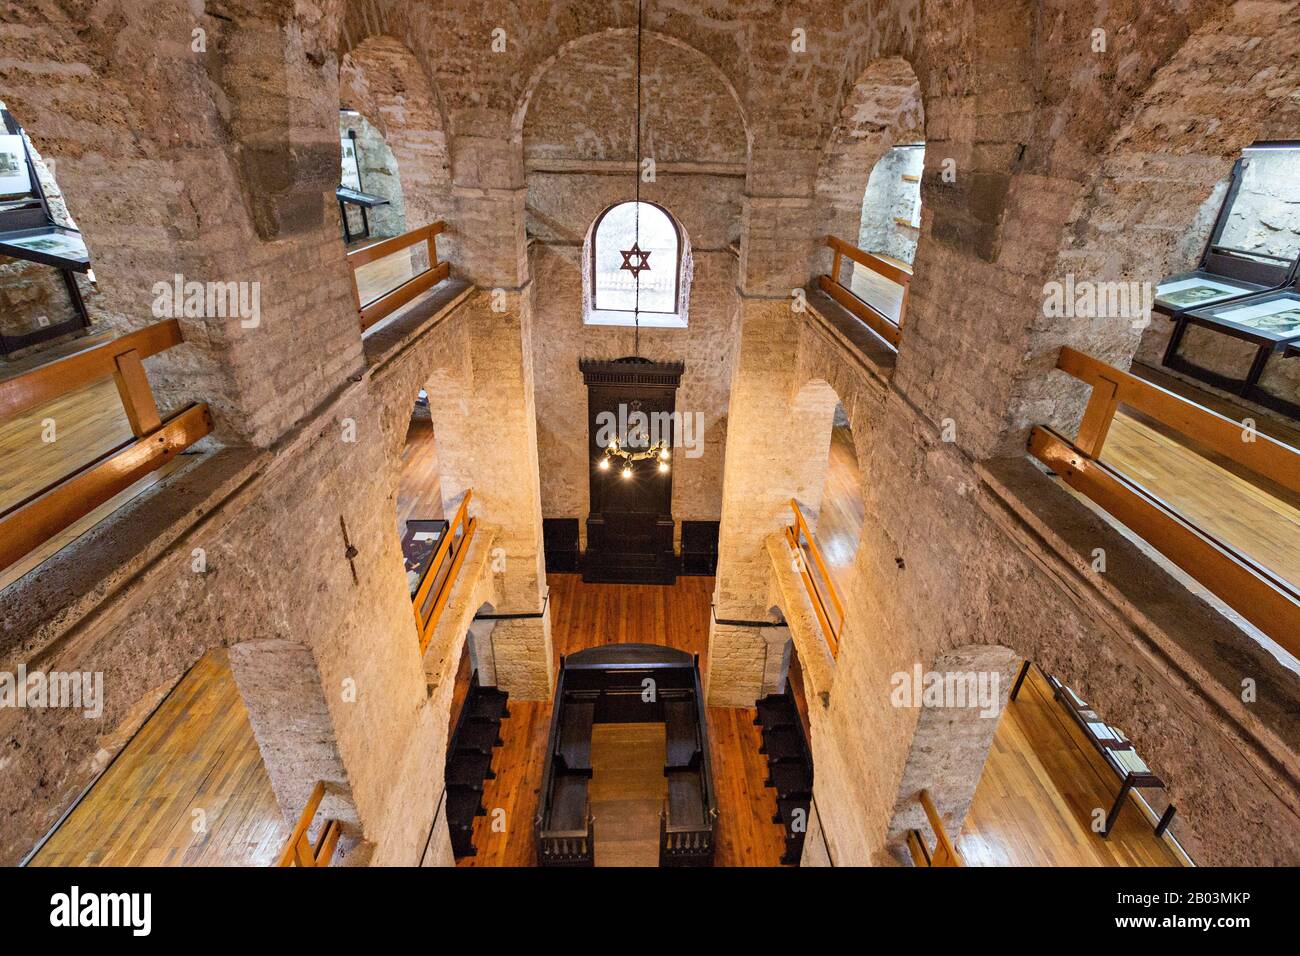 Interior of the oldest synagogue, in Sarajevo, Bosnia and Herzegovina Stock Photo